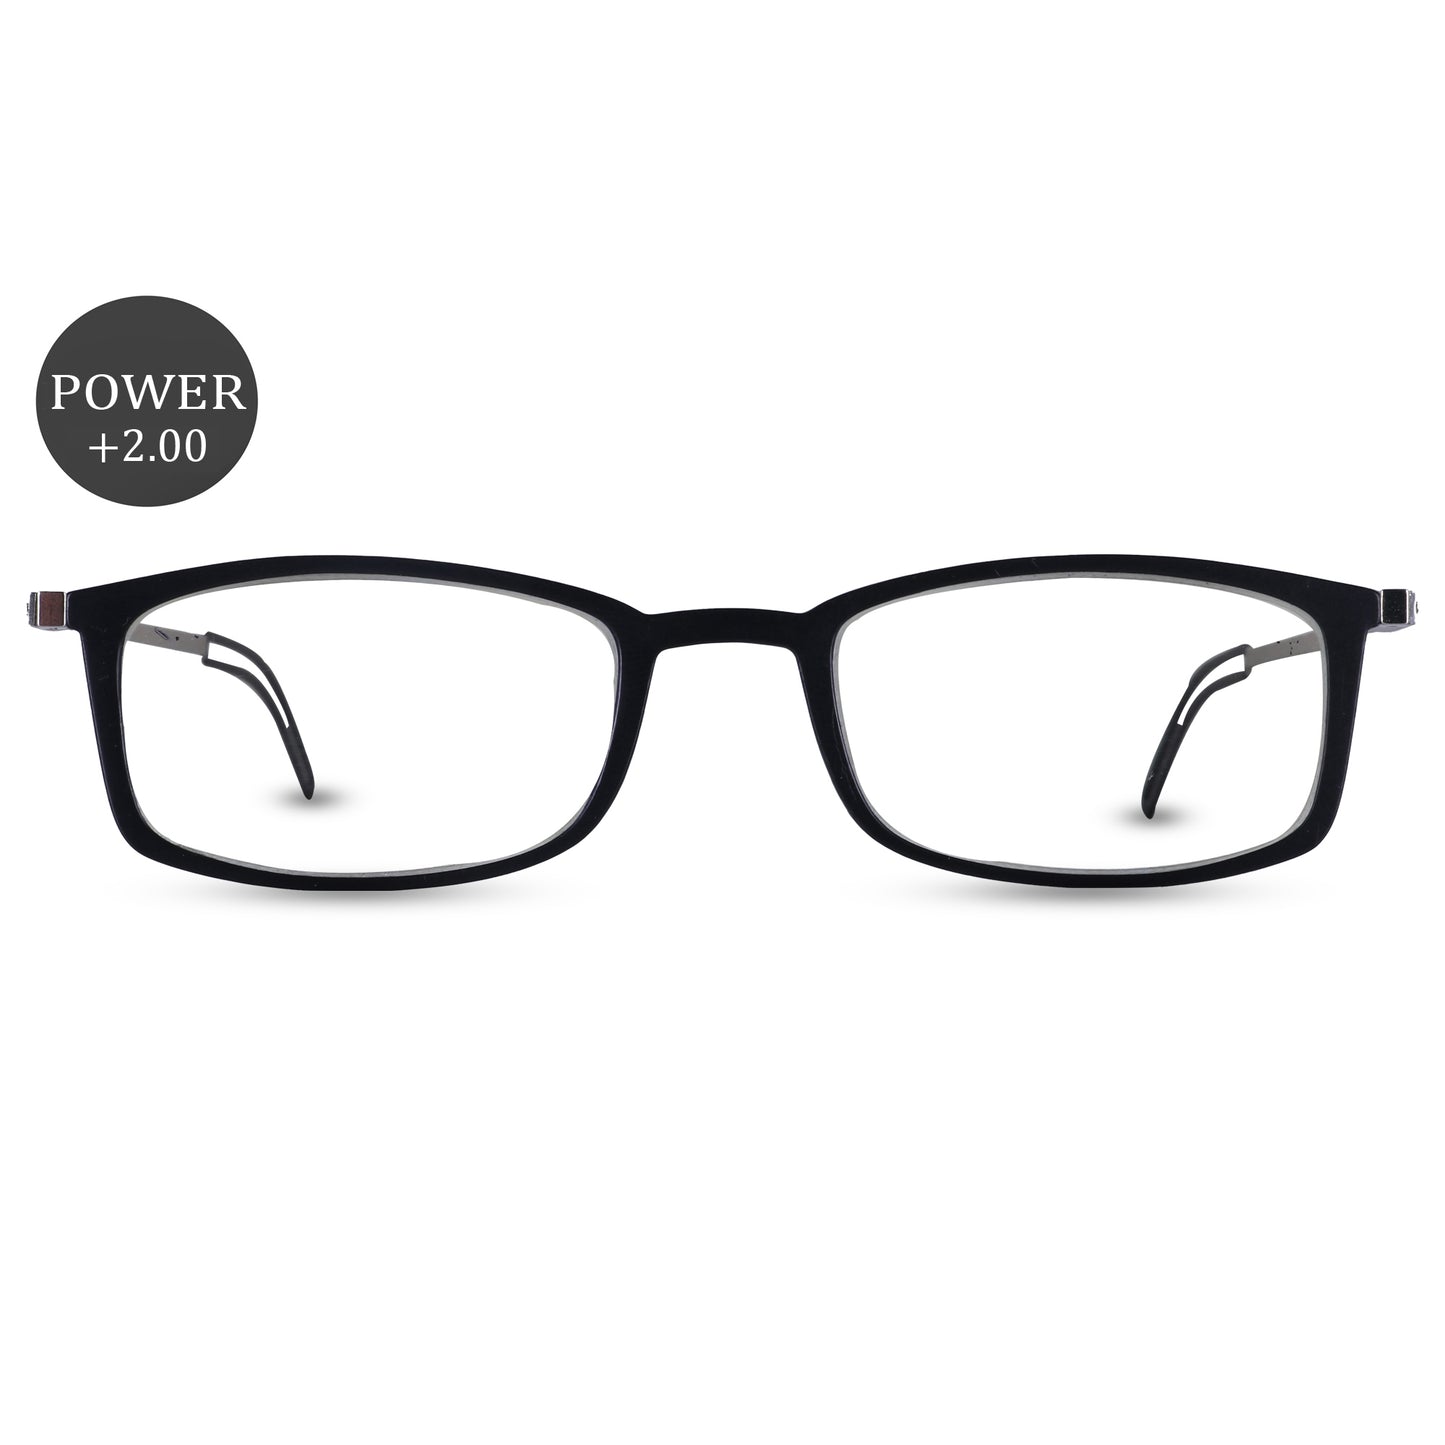 Sirts Thin Black Rectangular Reading Glasses +2.00